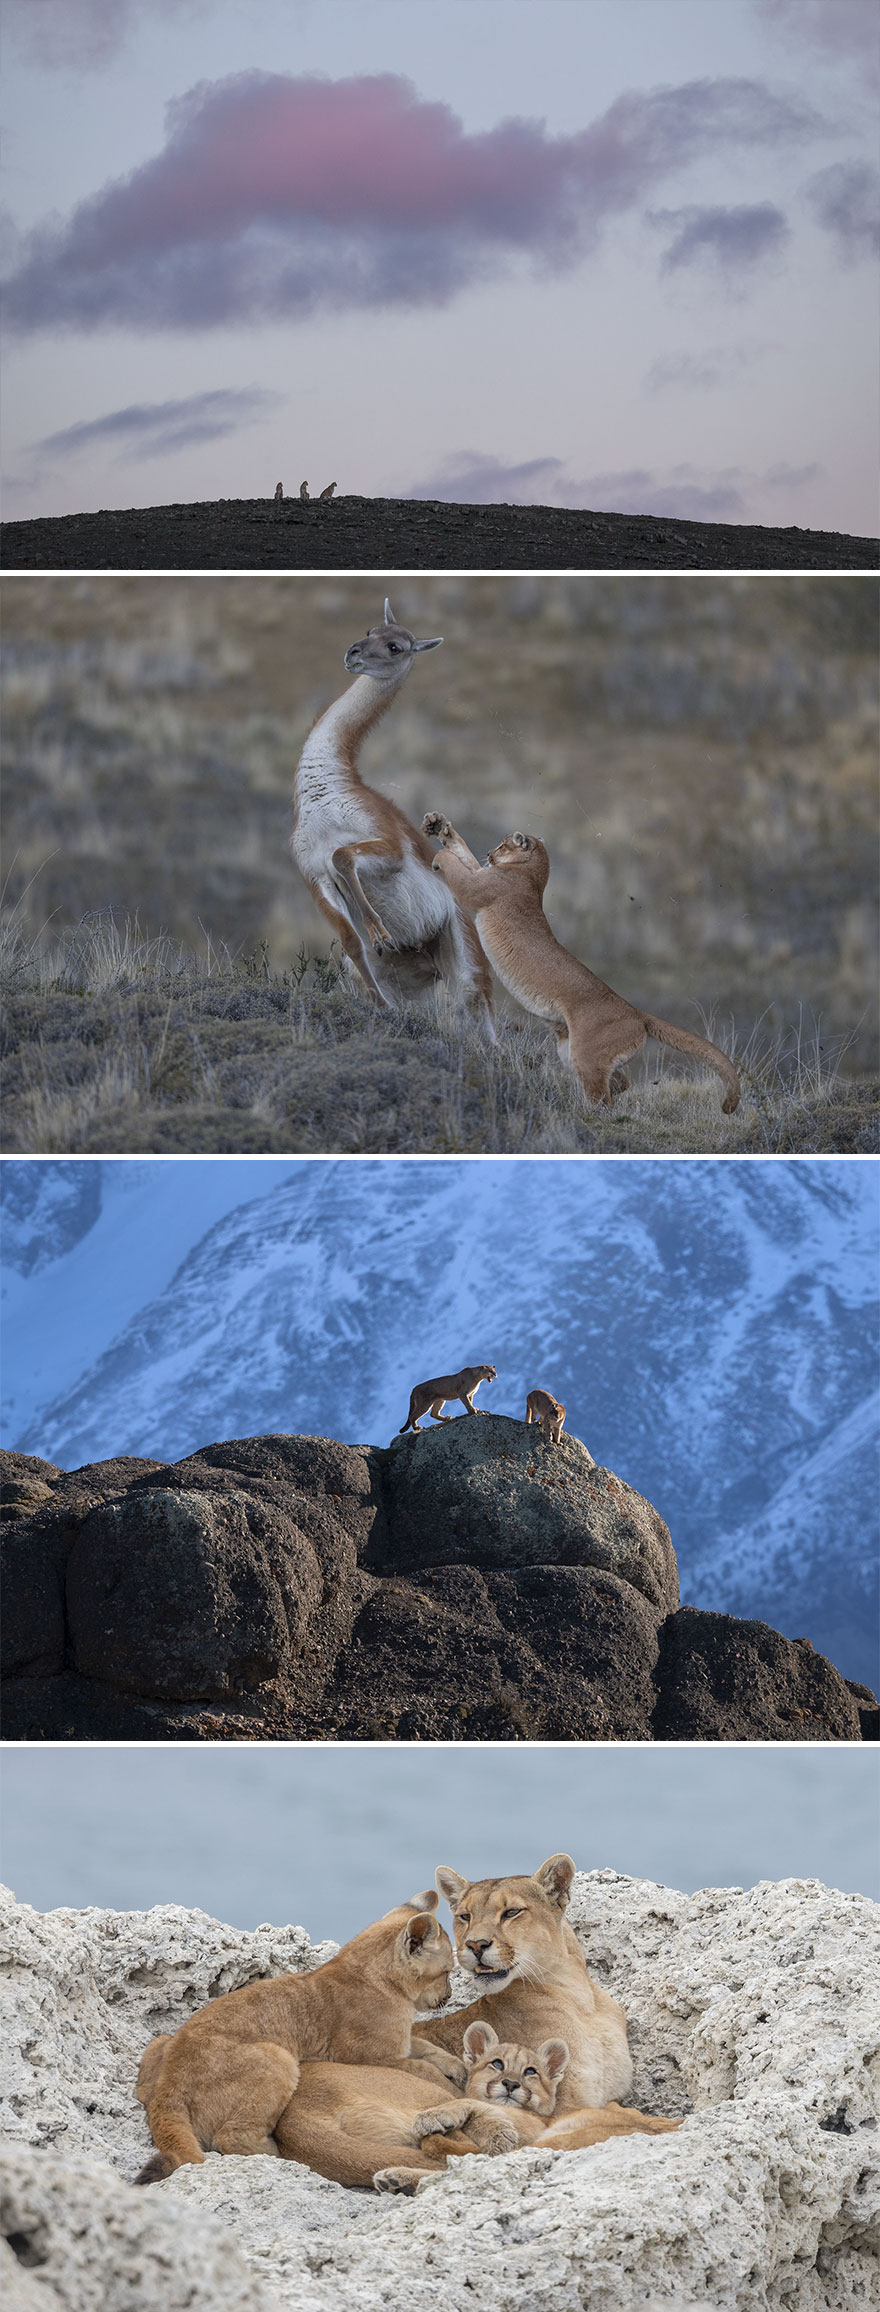 Nature, Stories, 3rd Prize, "Wild Pumas Of Patagonia" By Ingo Arndt